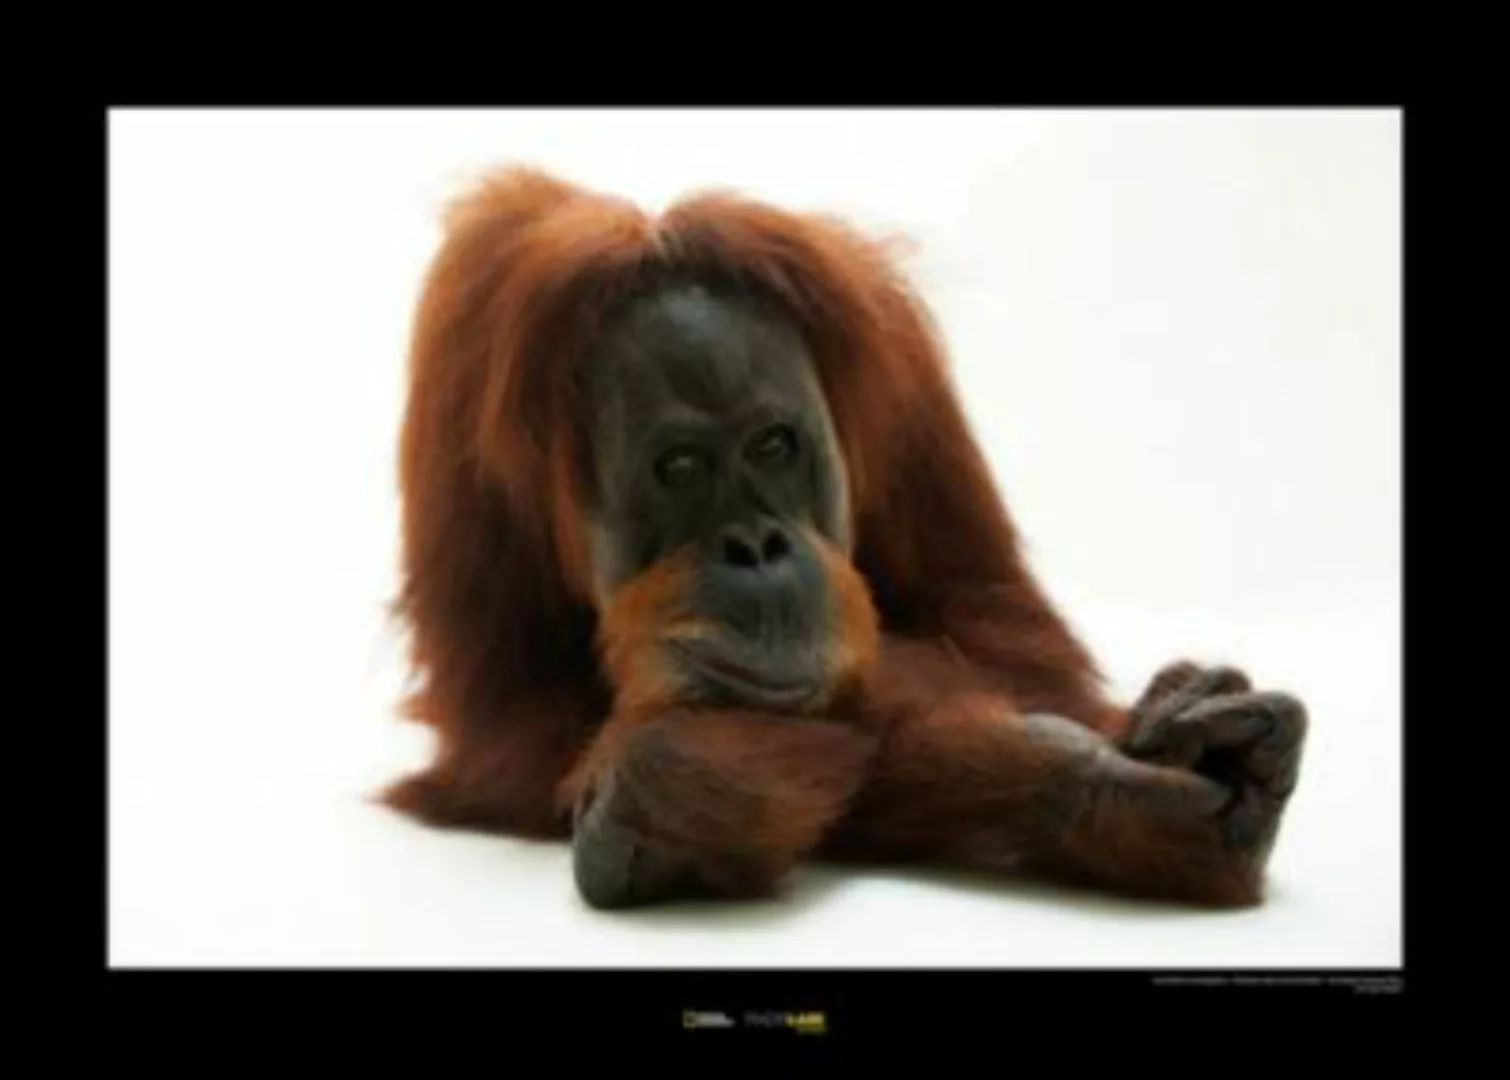 KOMAR Wandbild - Sumatran Orangutan - Größe: 70 x 50 cm mehrfarbig Gr. one günstig online kaufen